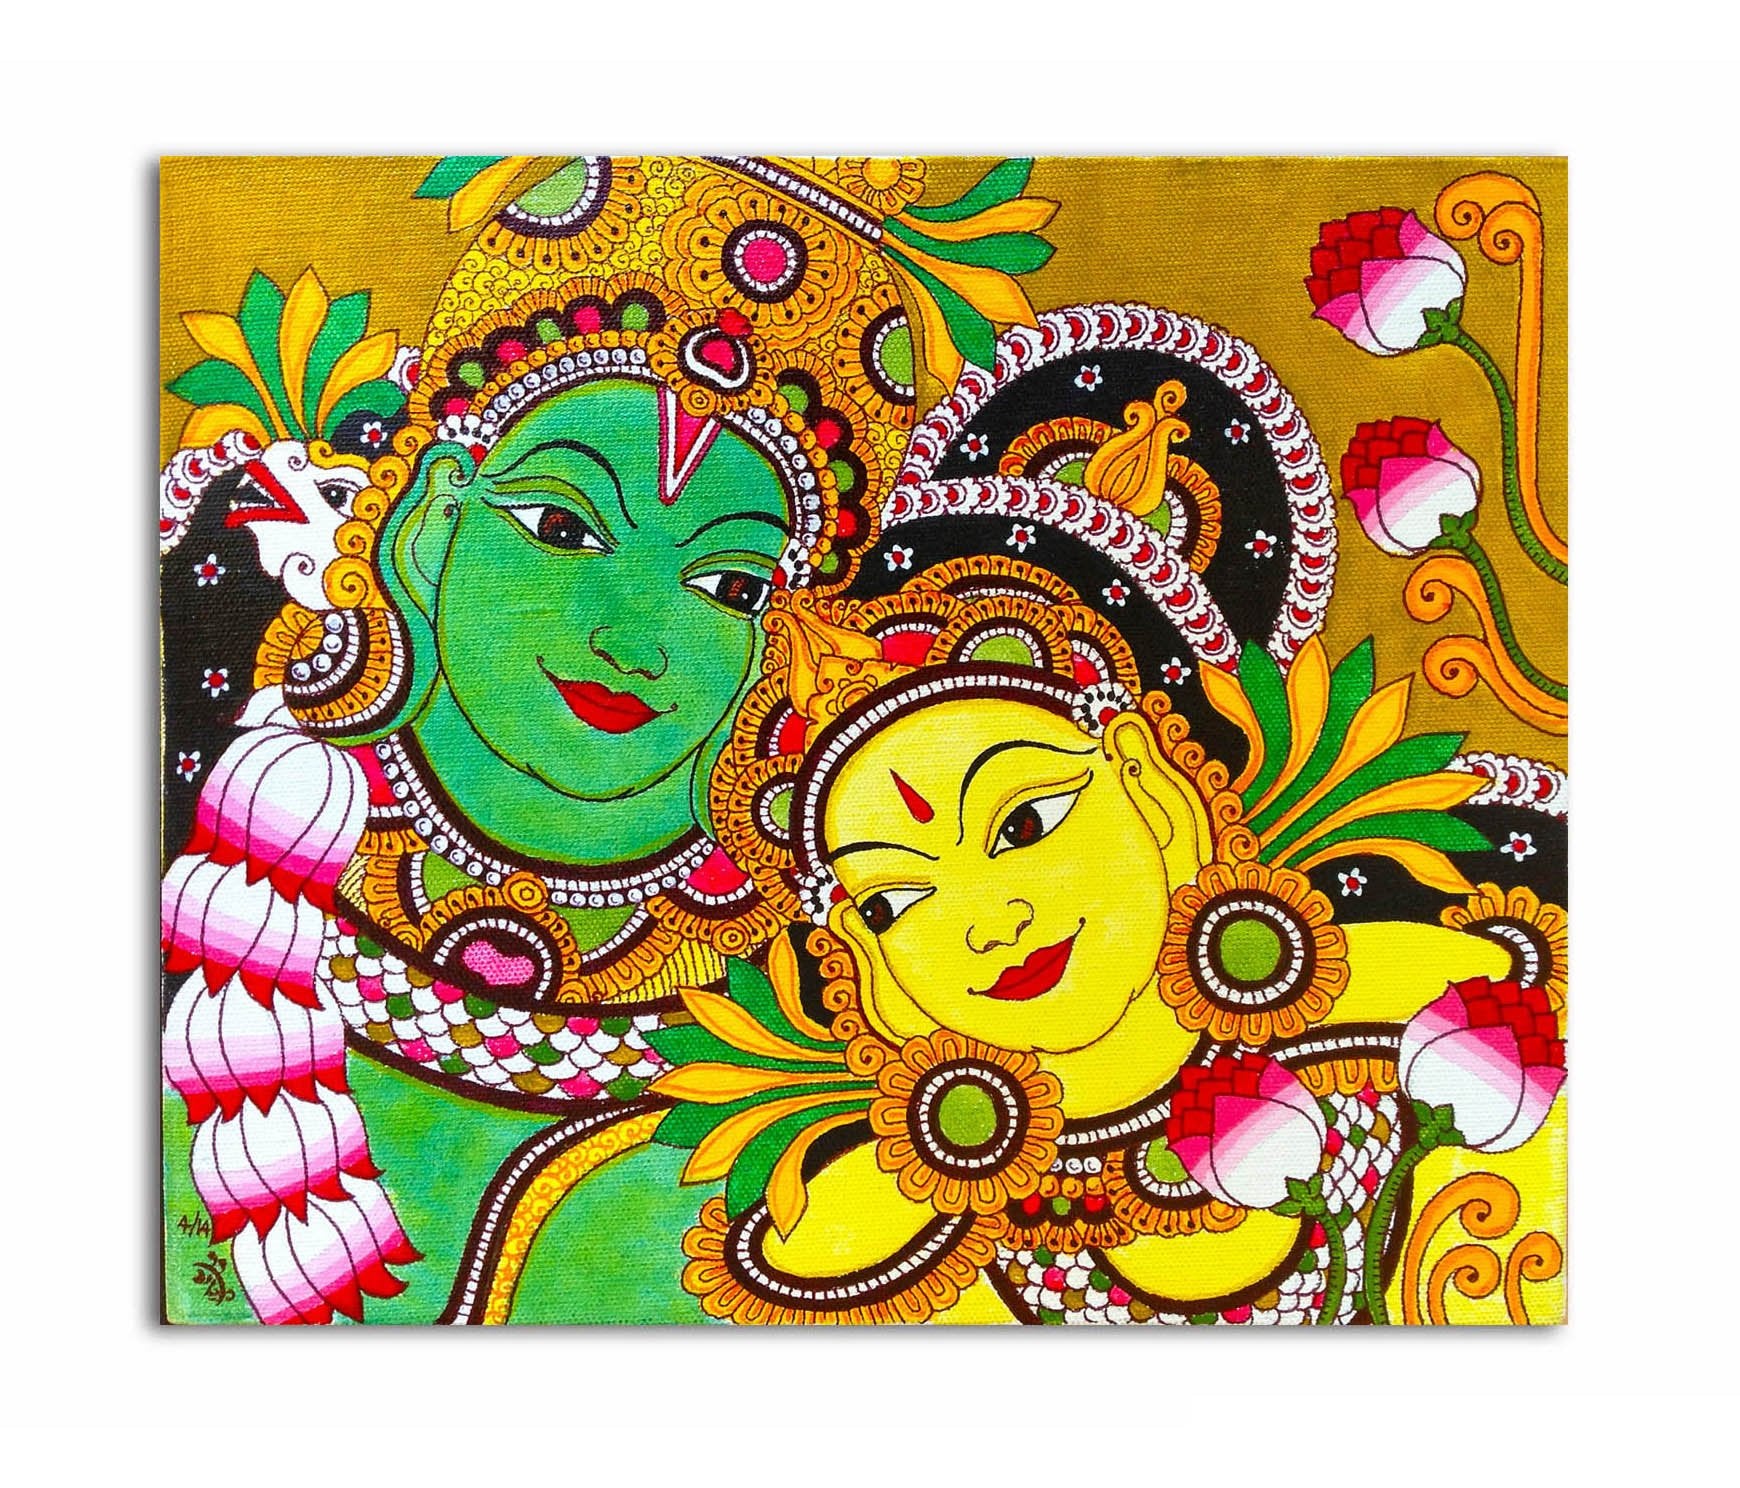 Radha and Krishna